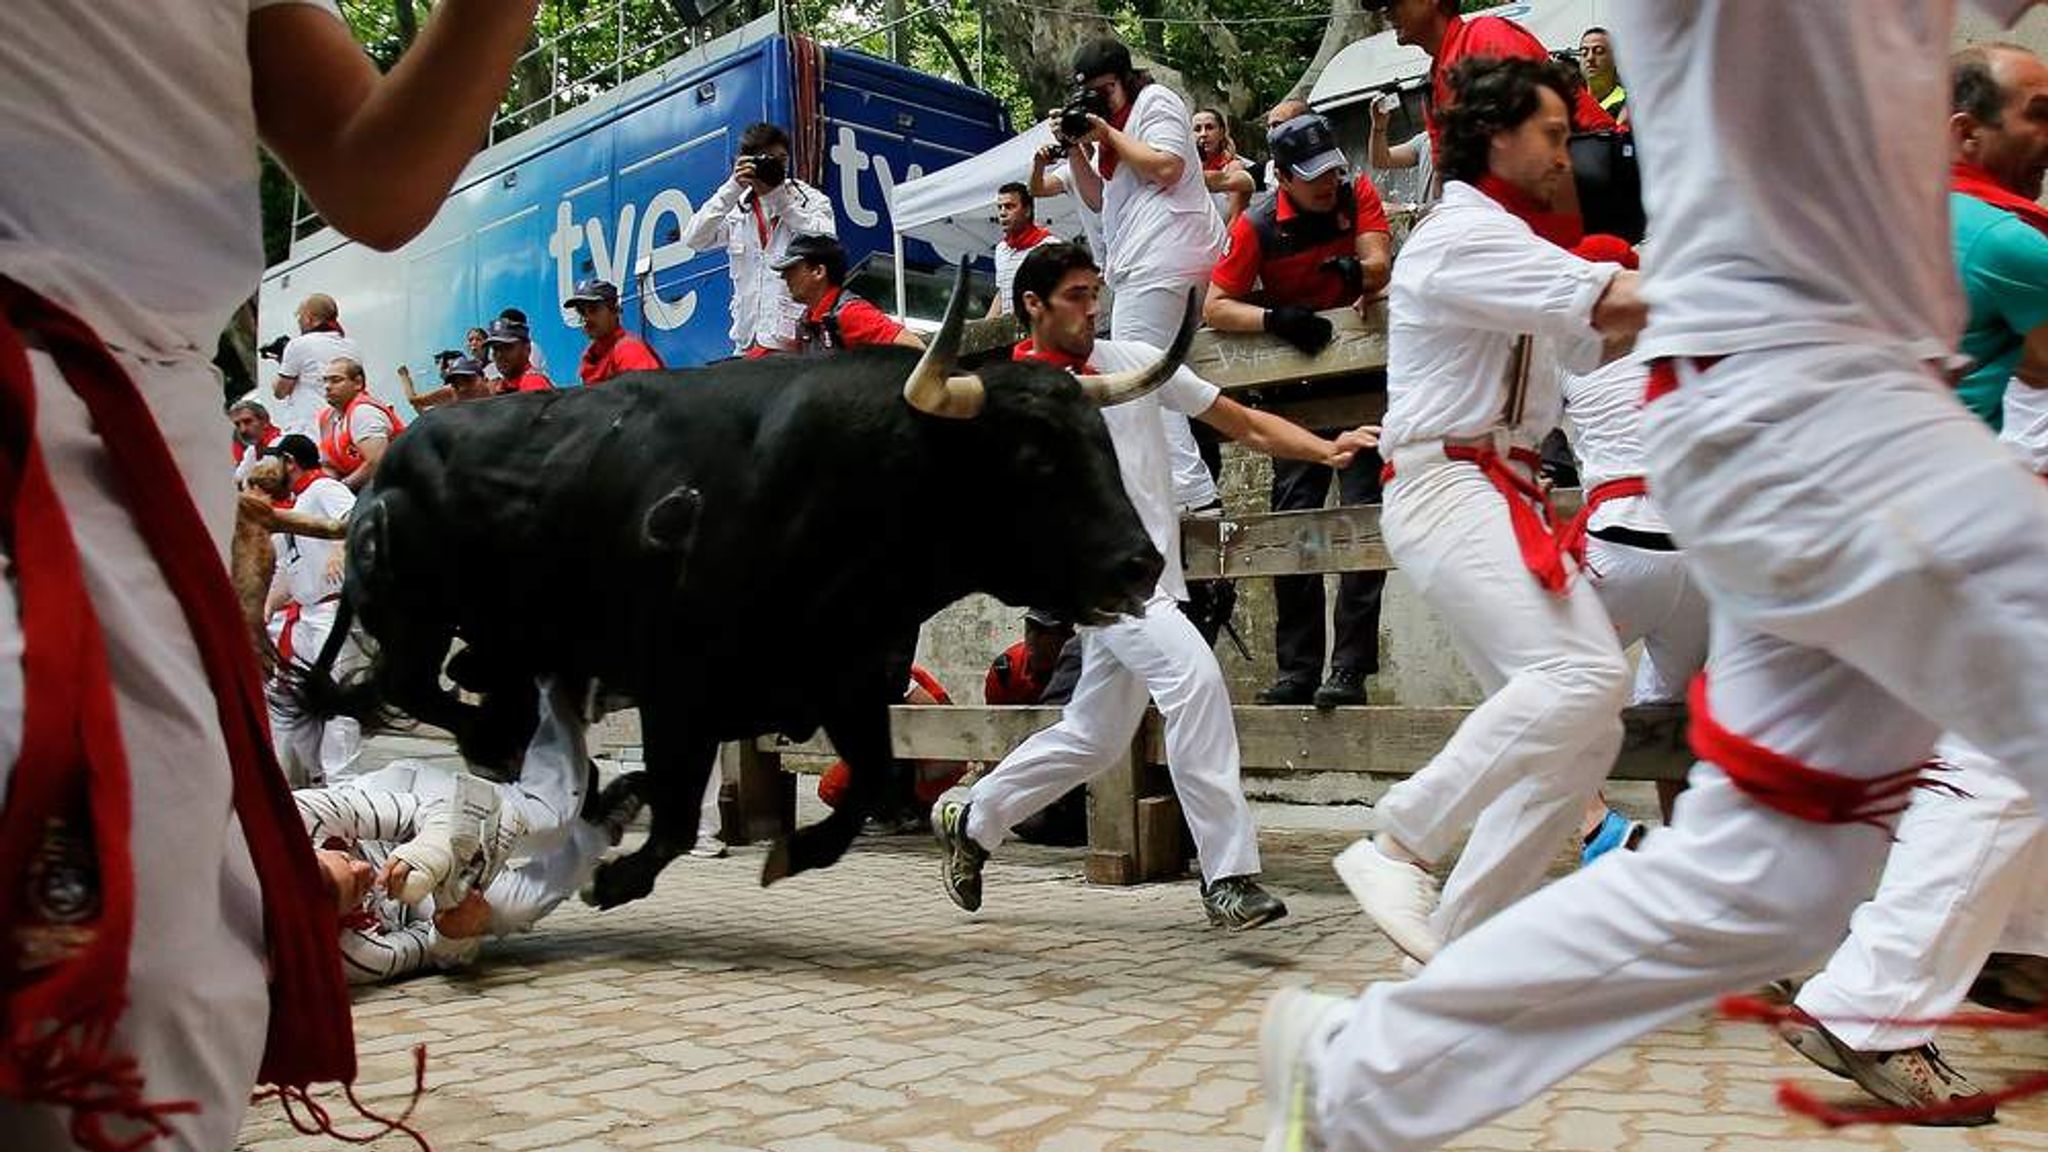 Bull Run Pamplona Inspired Event Heads To US US News Sky News